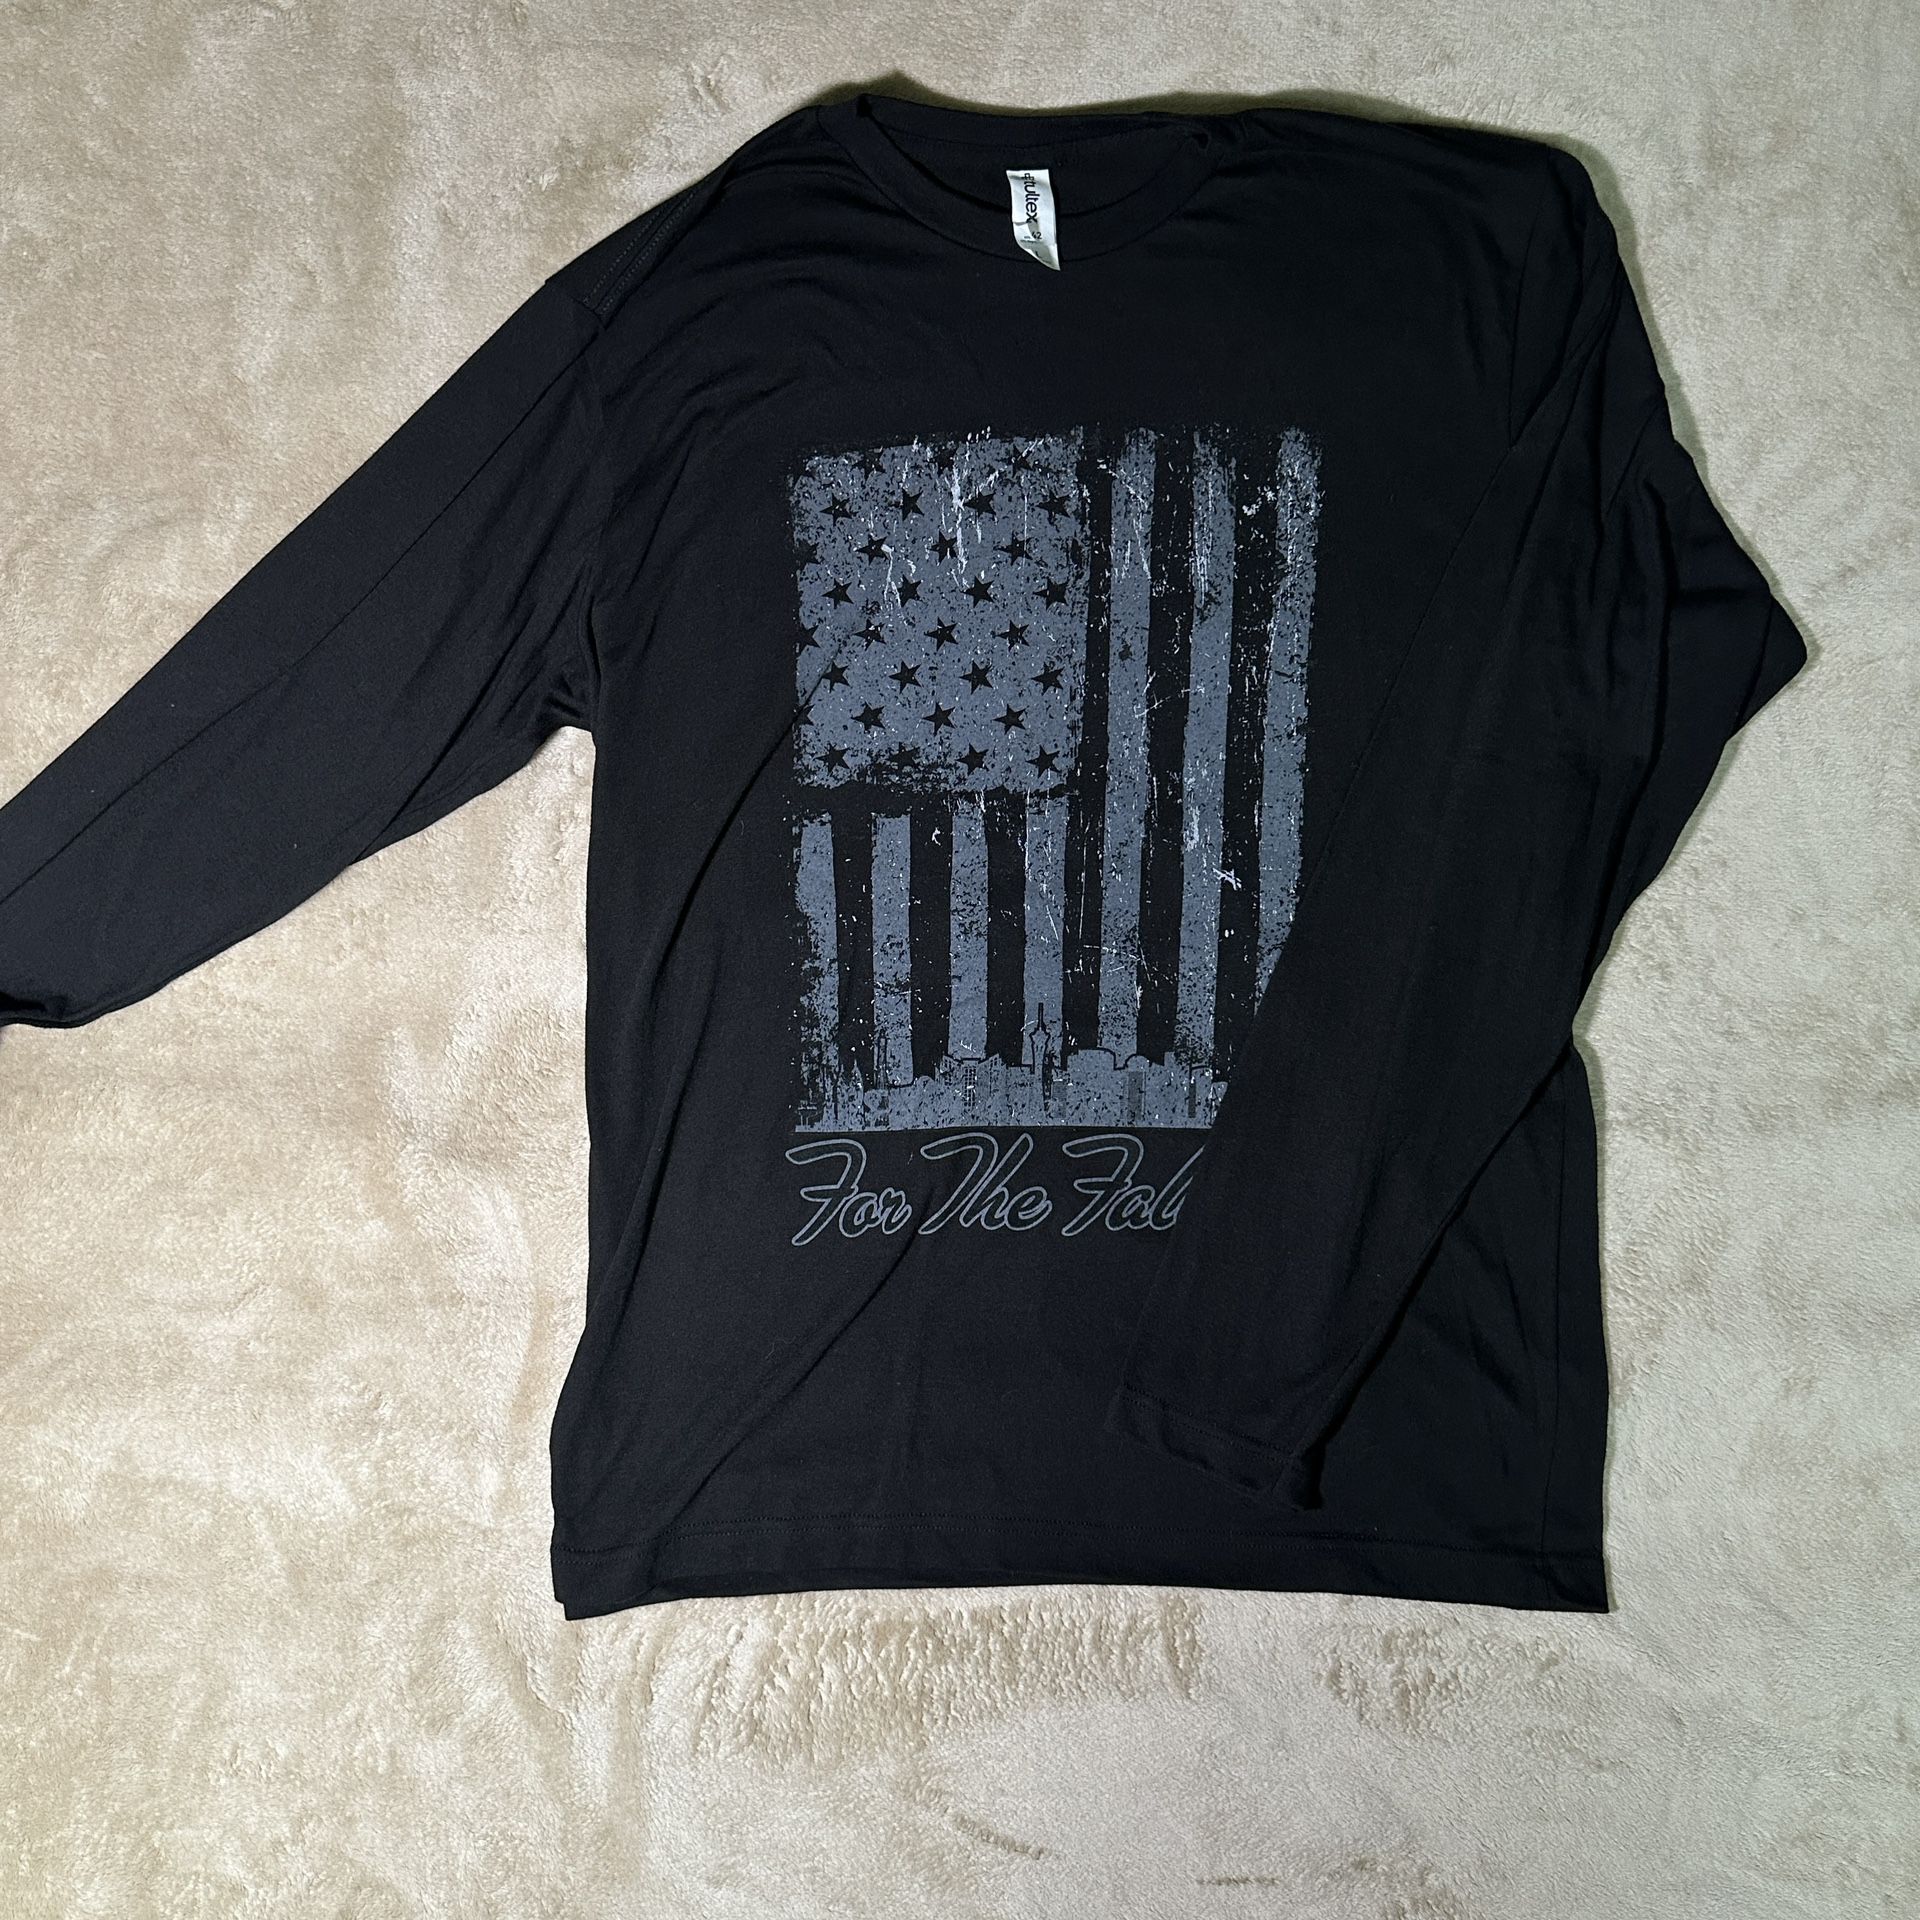 Tultex black t-shirt american flag light weight size L